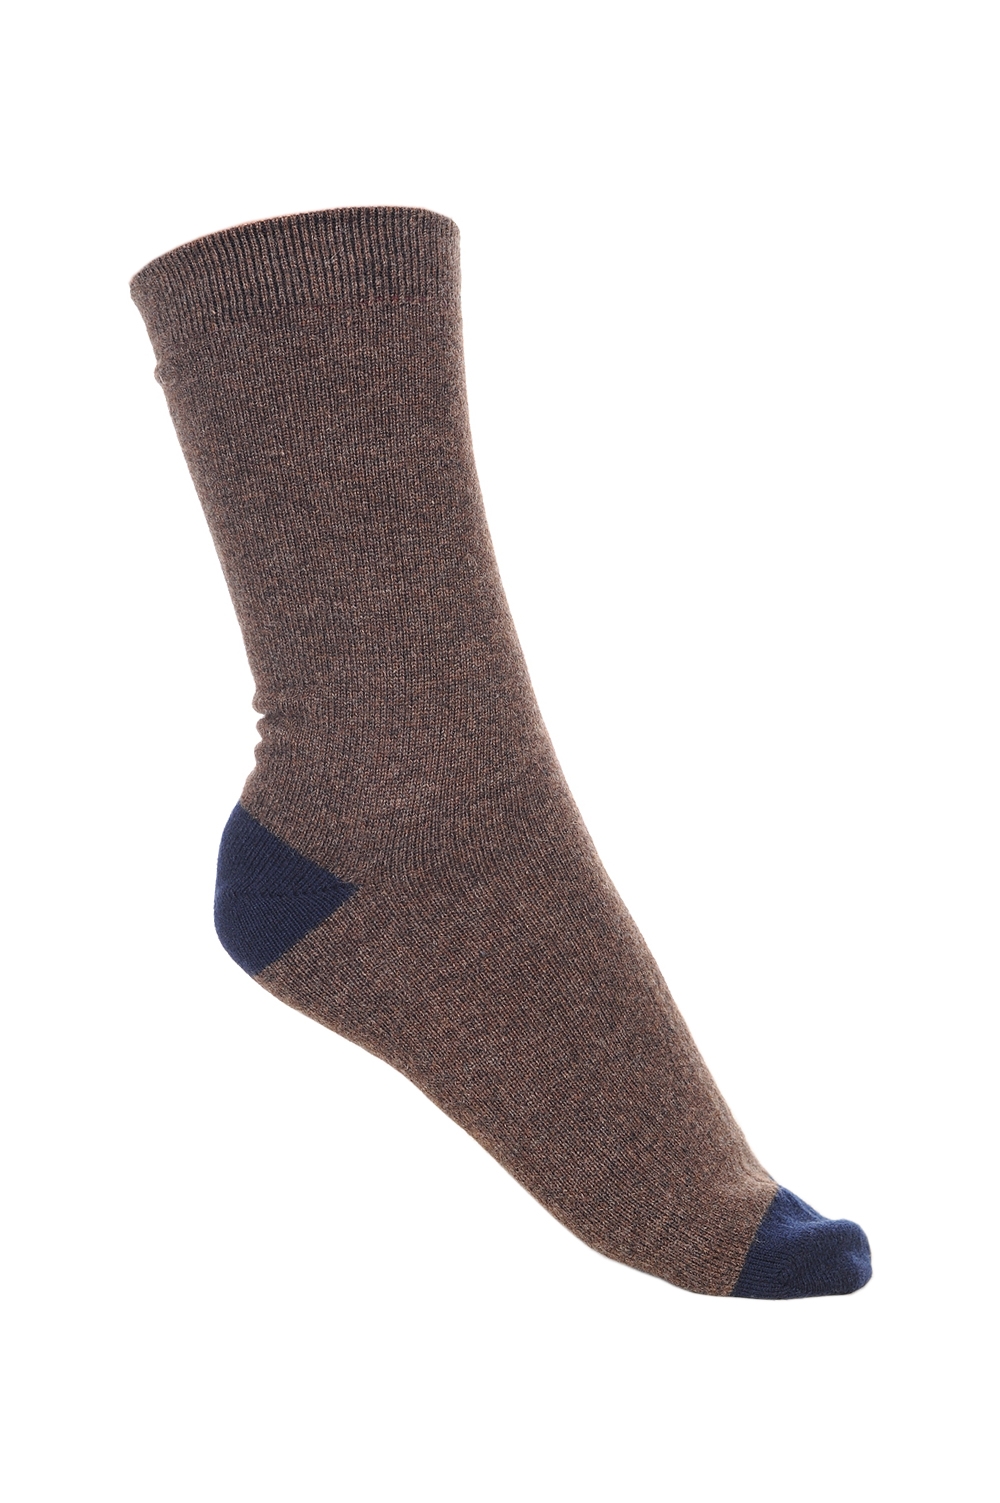 Cashmere & Elastane accessories socks frontibus marron chine dress blue 5 5 8 39 42 